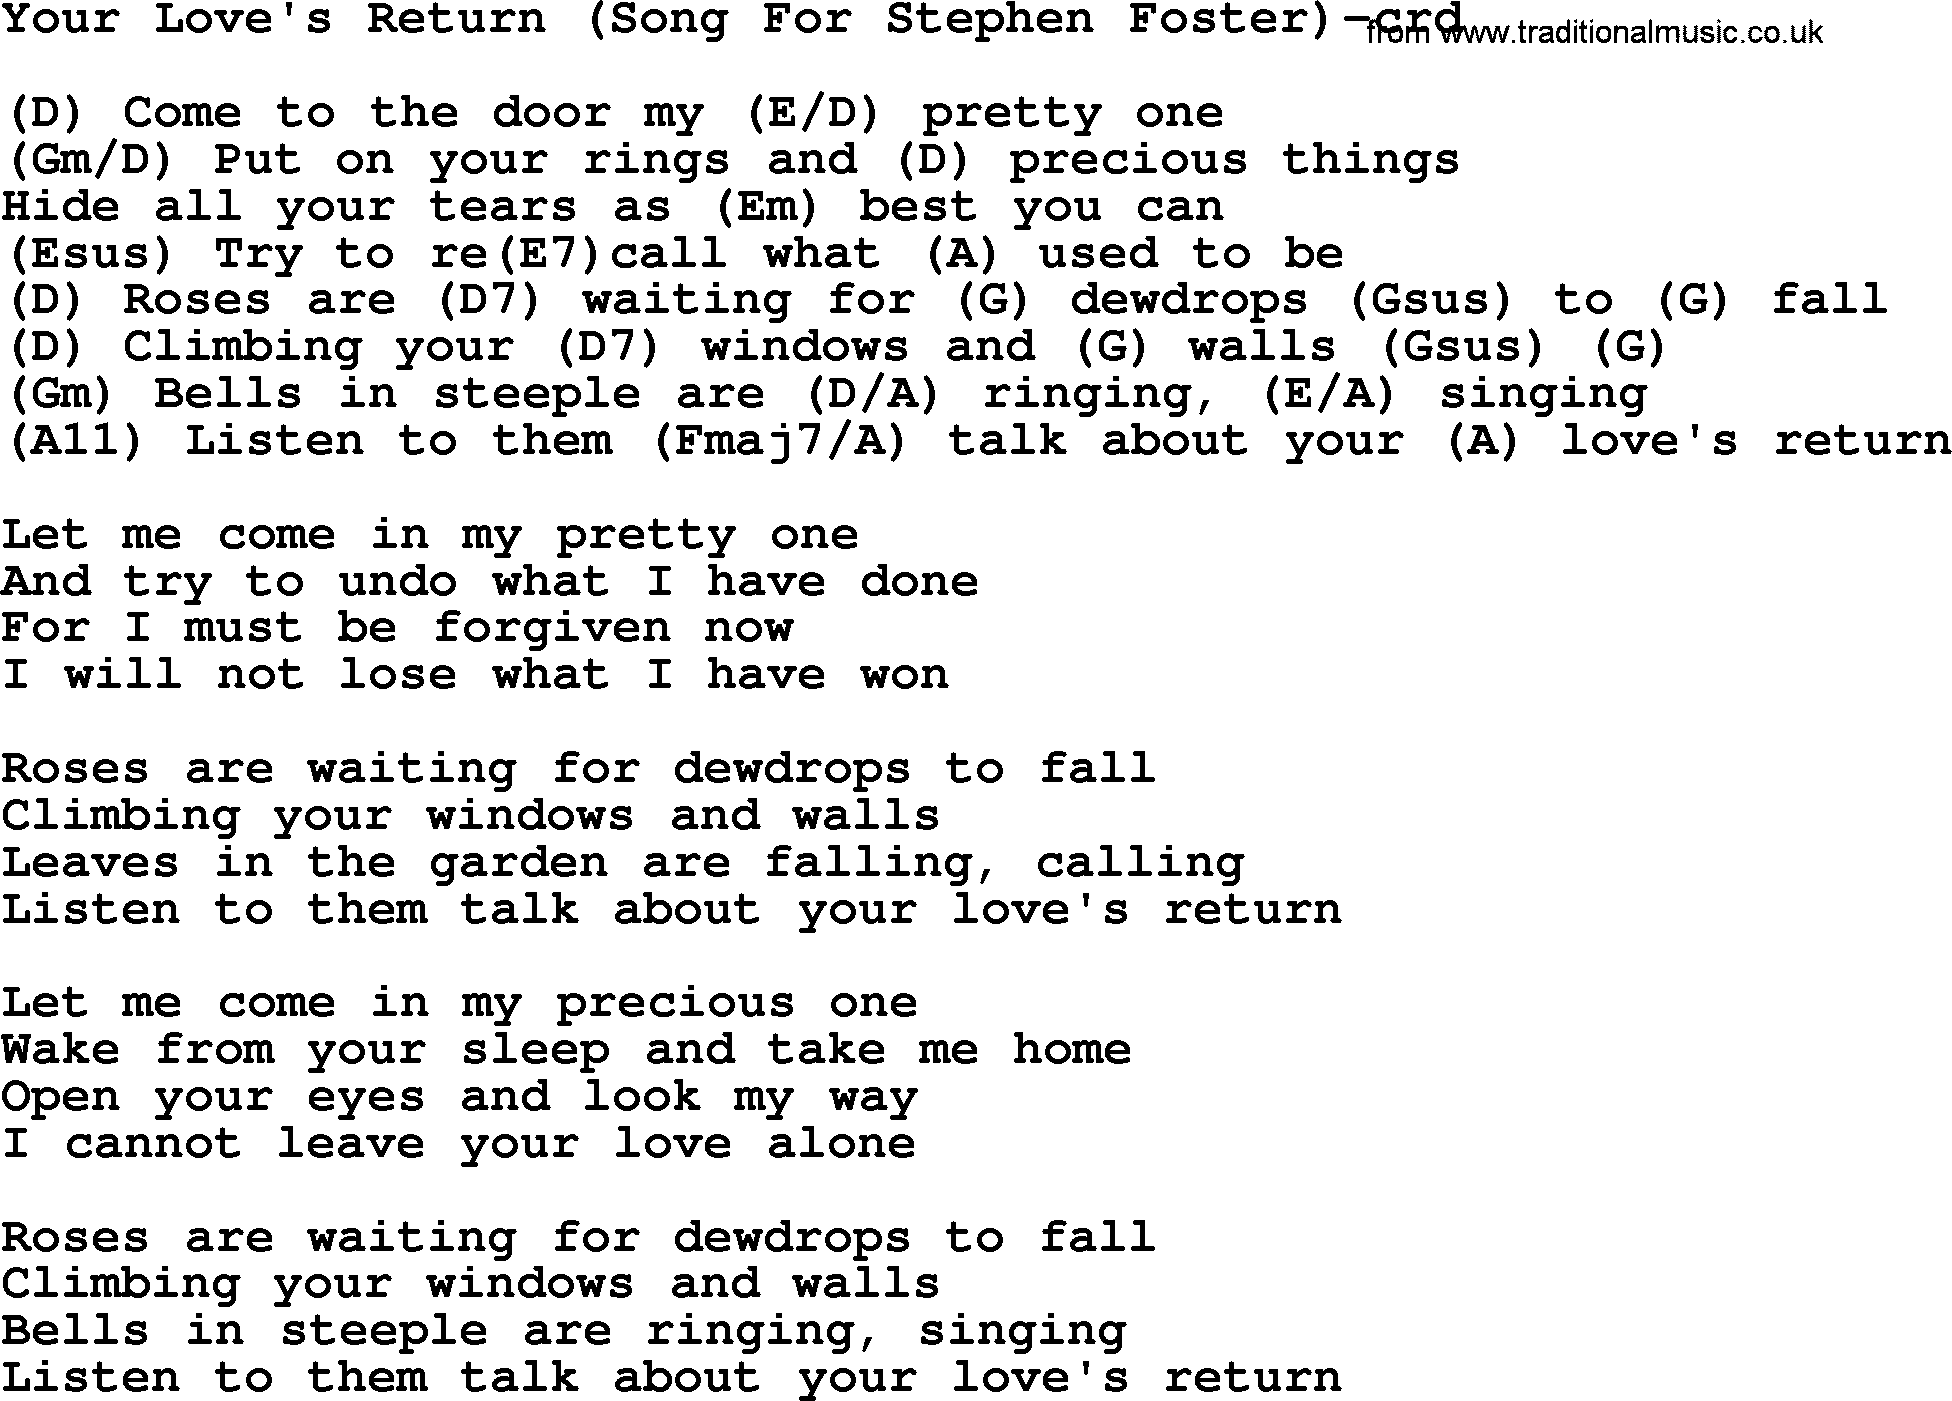 Gordon Lightfoot song Your Love's Return (Song For Stephen Foster), lyrics and chords